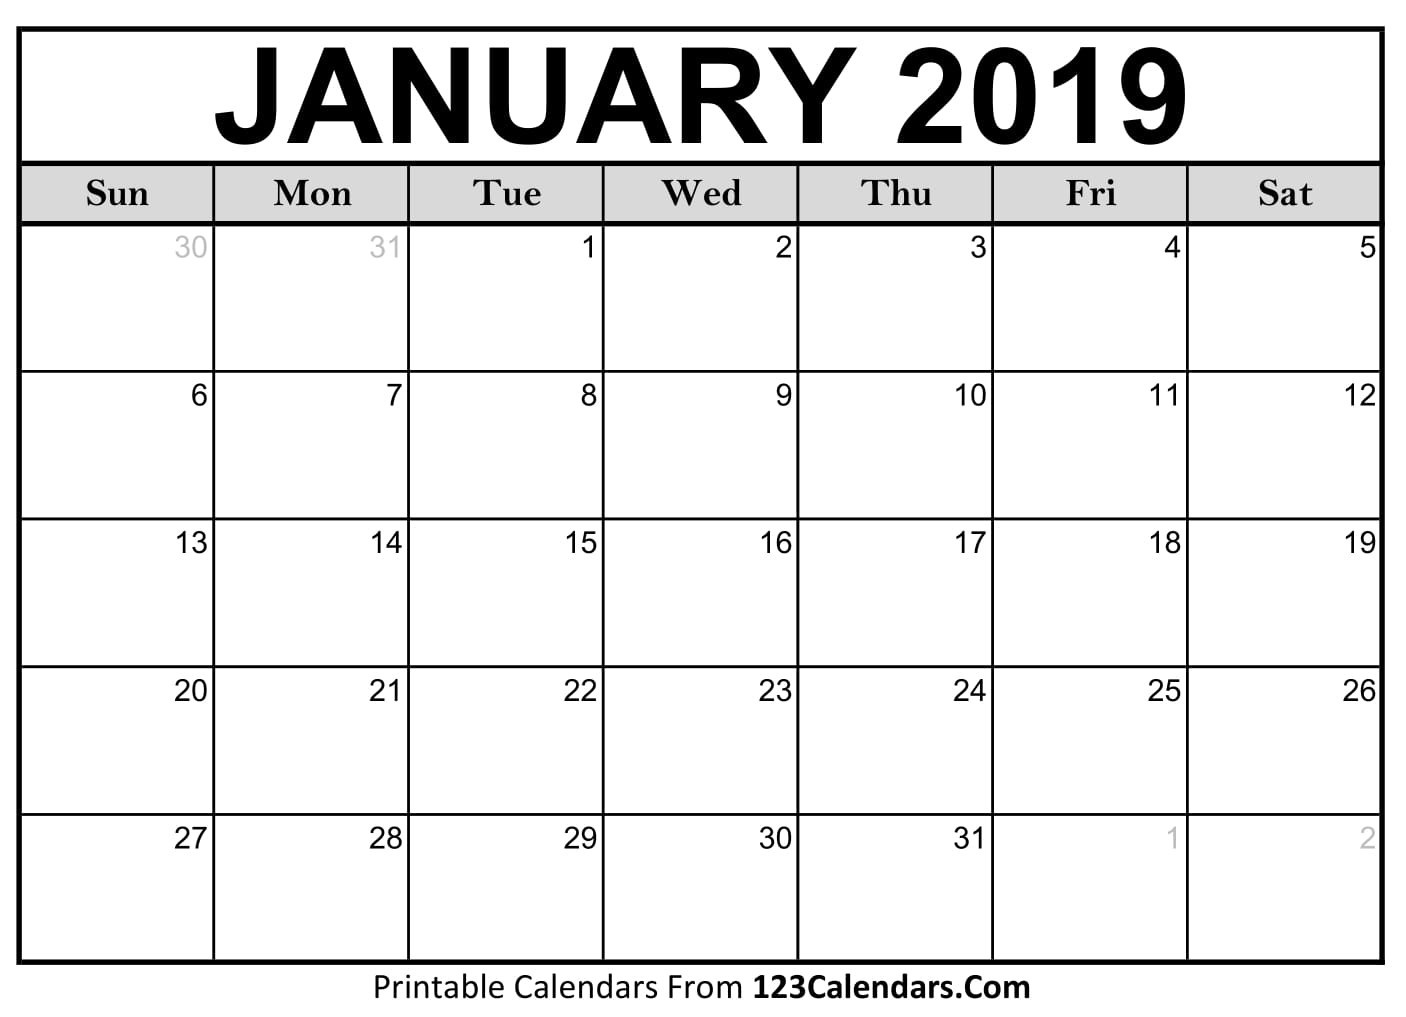 Free Printable Calendar | 123Calendars-2020 Monthly Calendar Template August Thru December